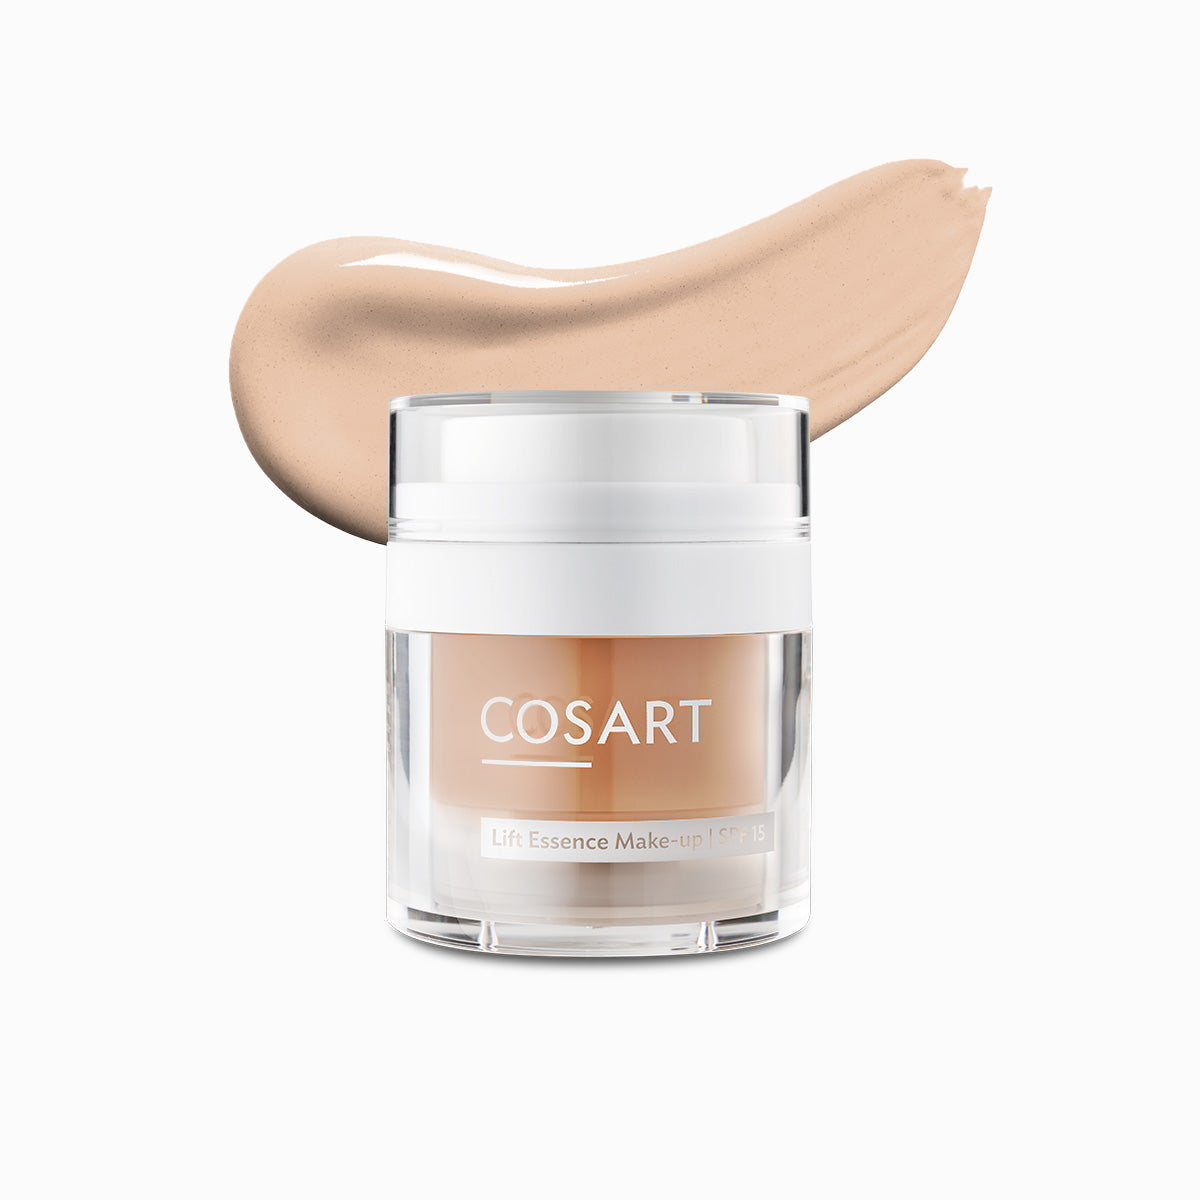 Cosart Lift Essence Make-up